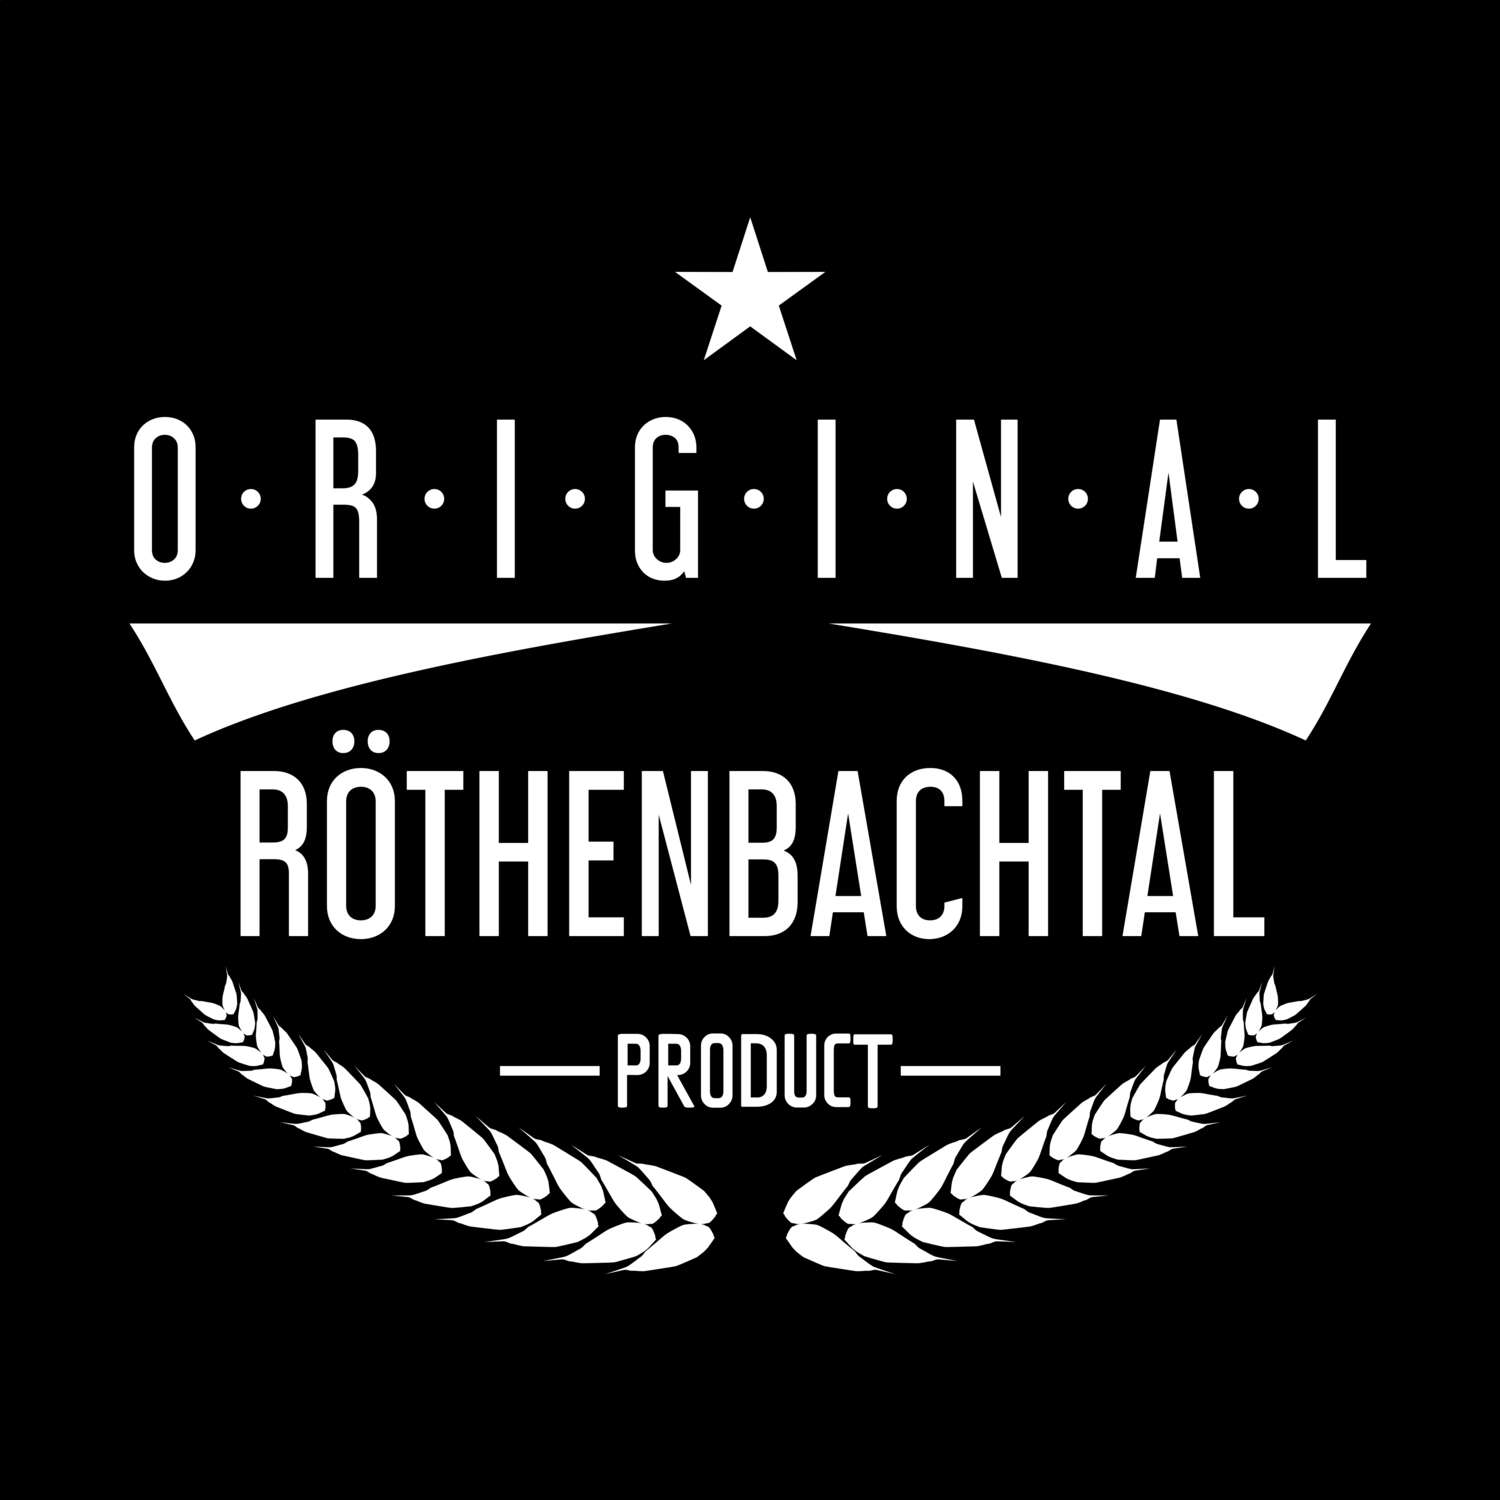 Röthenbachtal T-Shirt »Original Product«